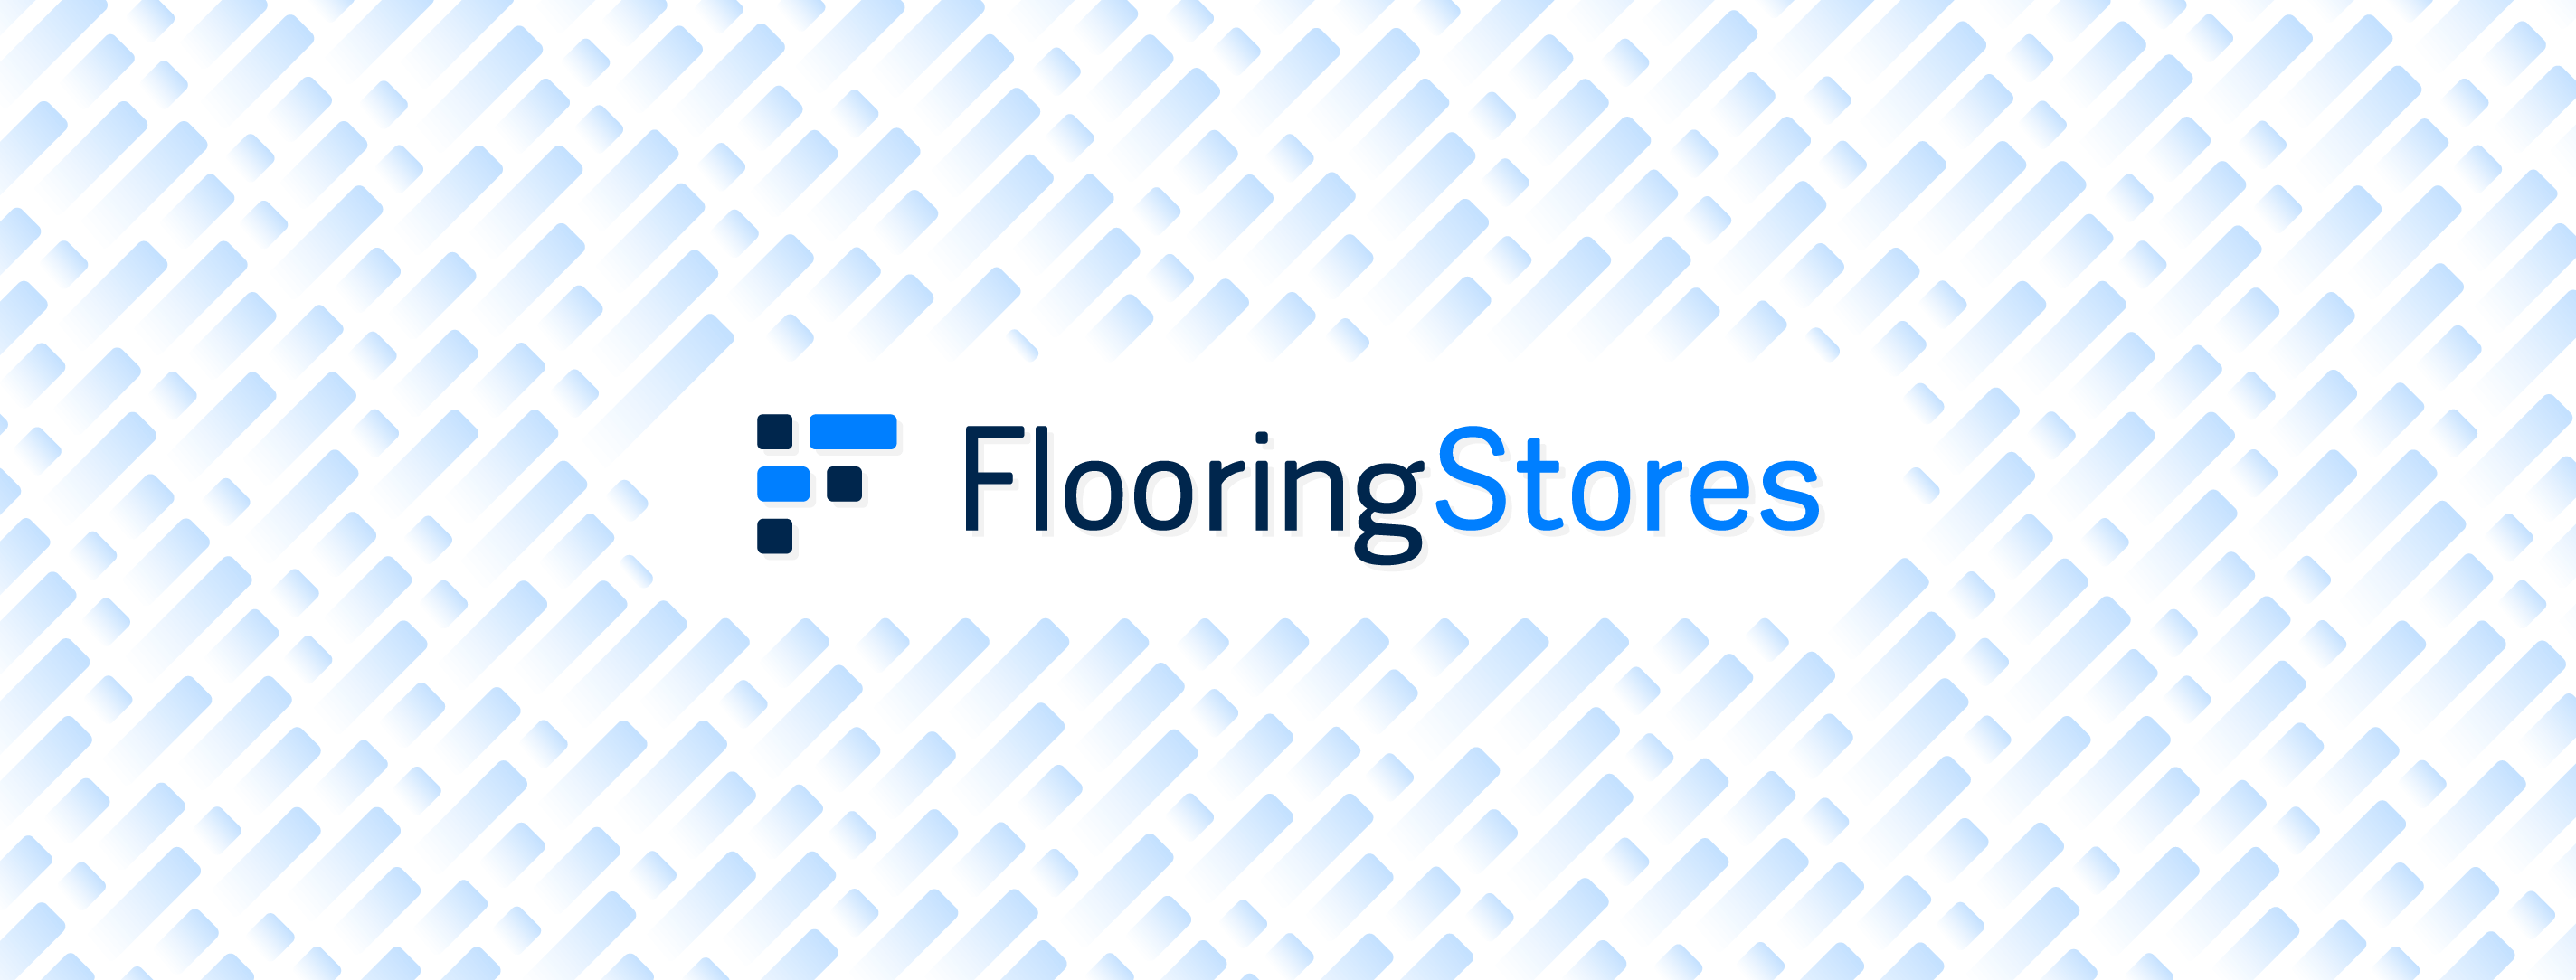 FlooringStores Social Media Banner Image